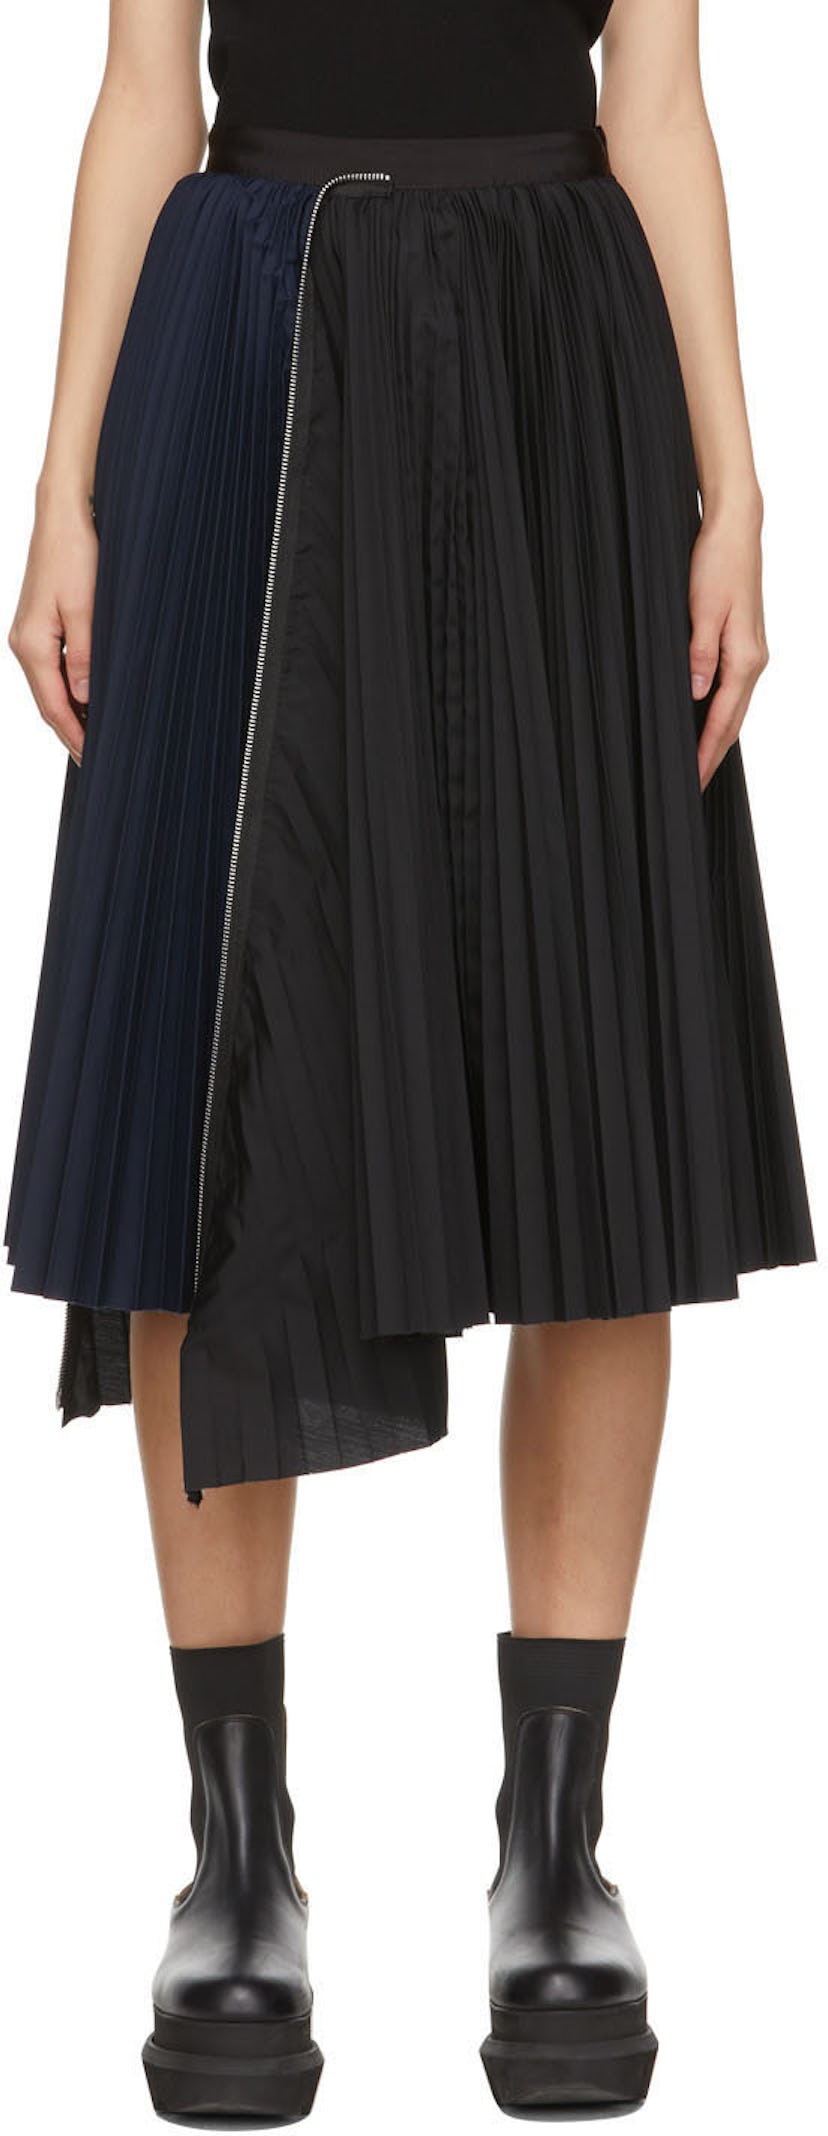 Black & Navy Zip Pleated Skirt